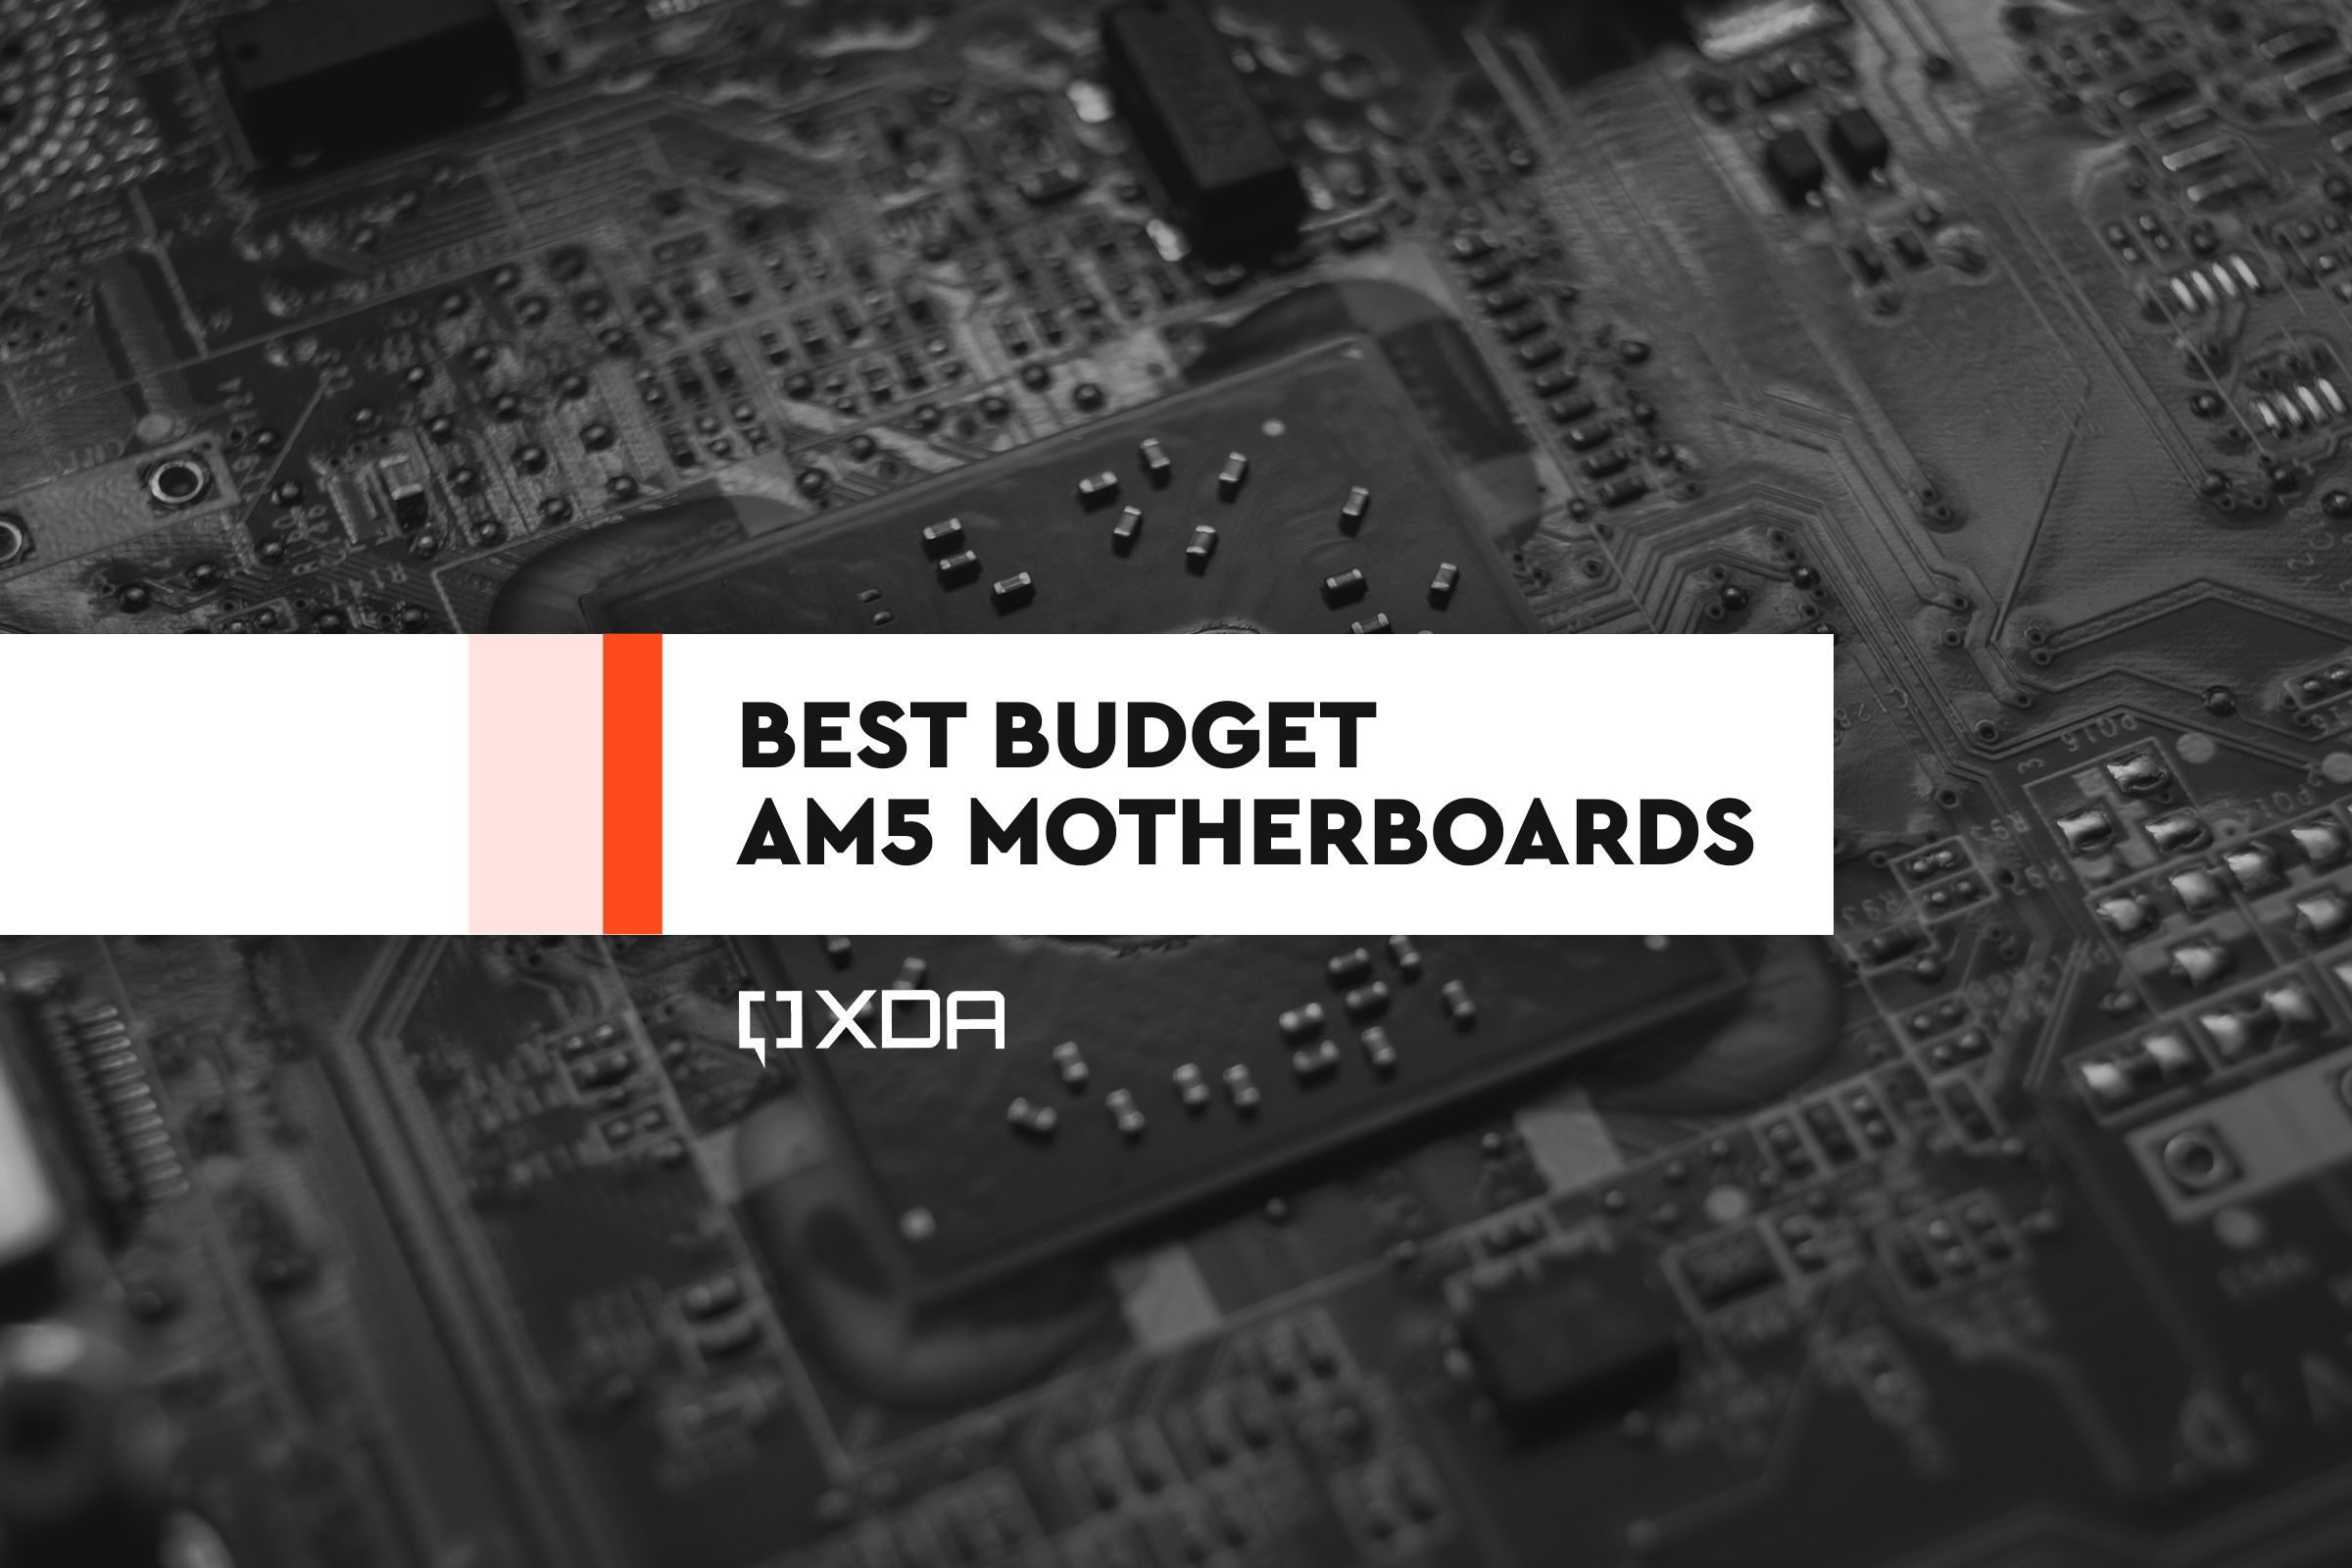 Best budget AM5 motherboards